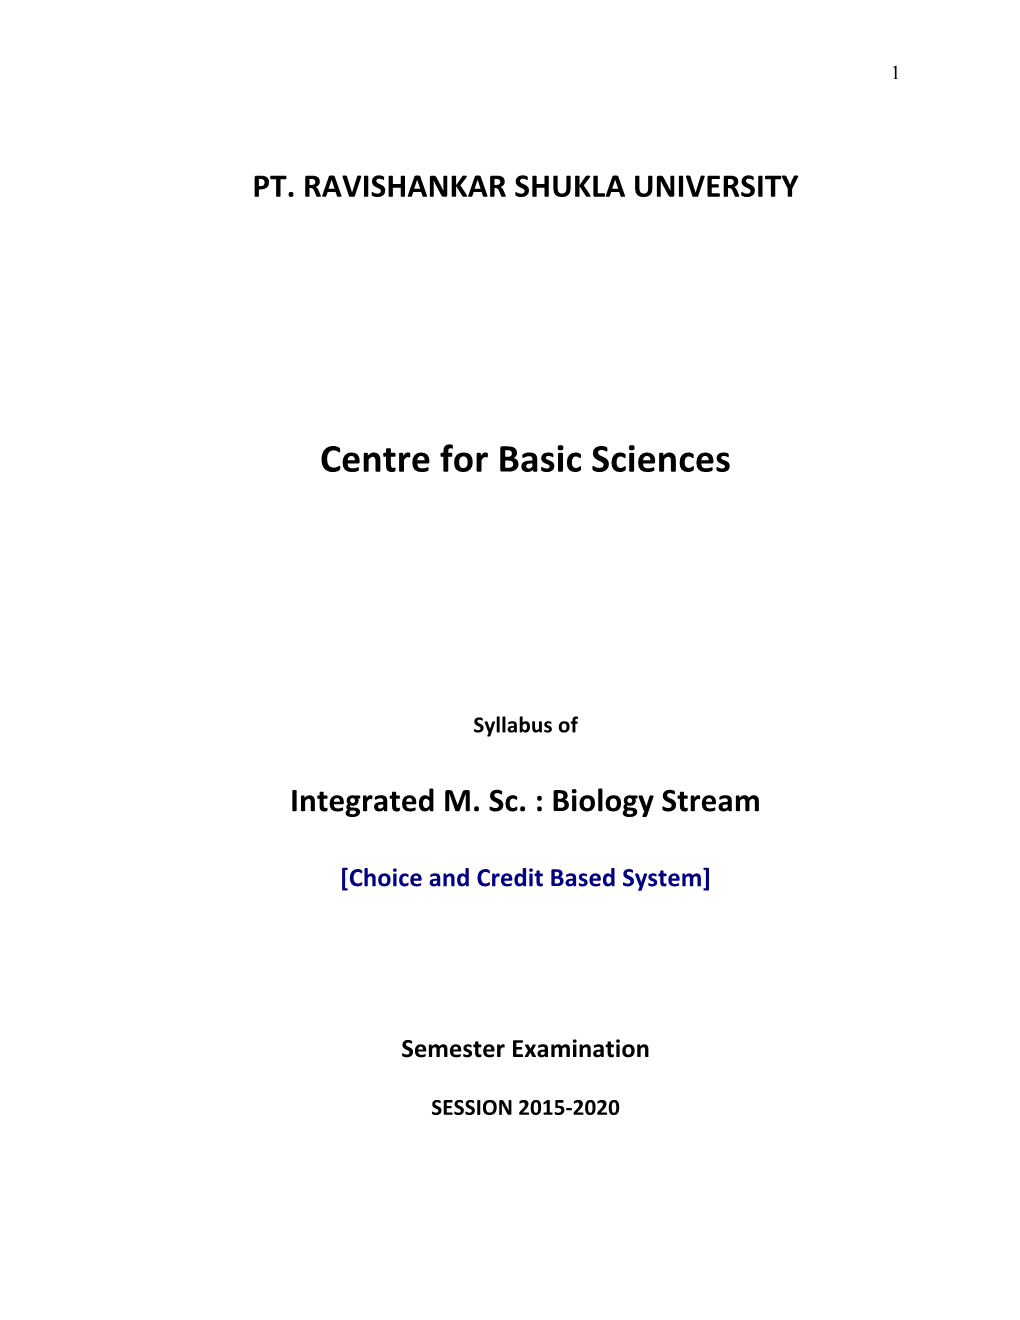 Centre for Basic Sciences